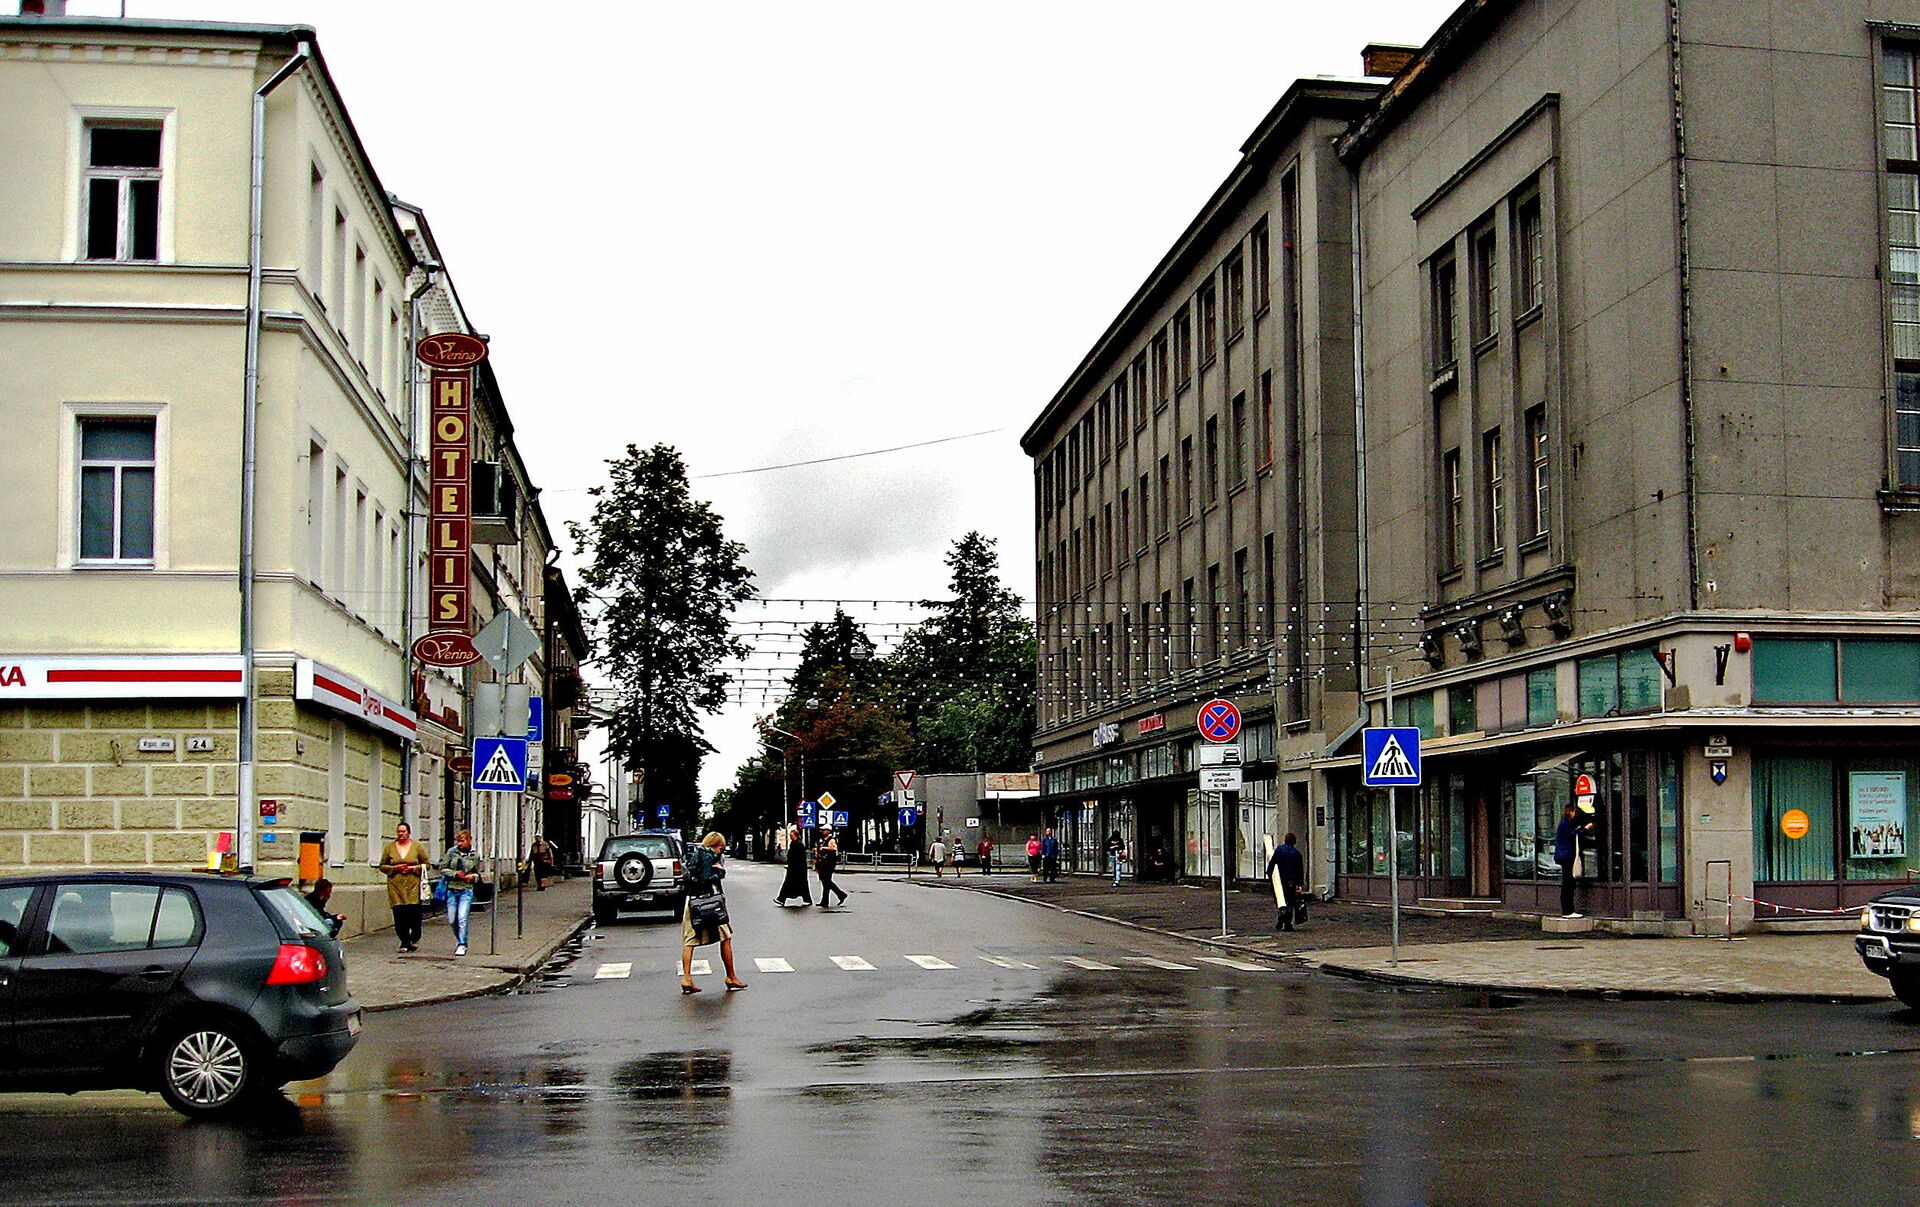 Латвия город даугавпилс